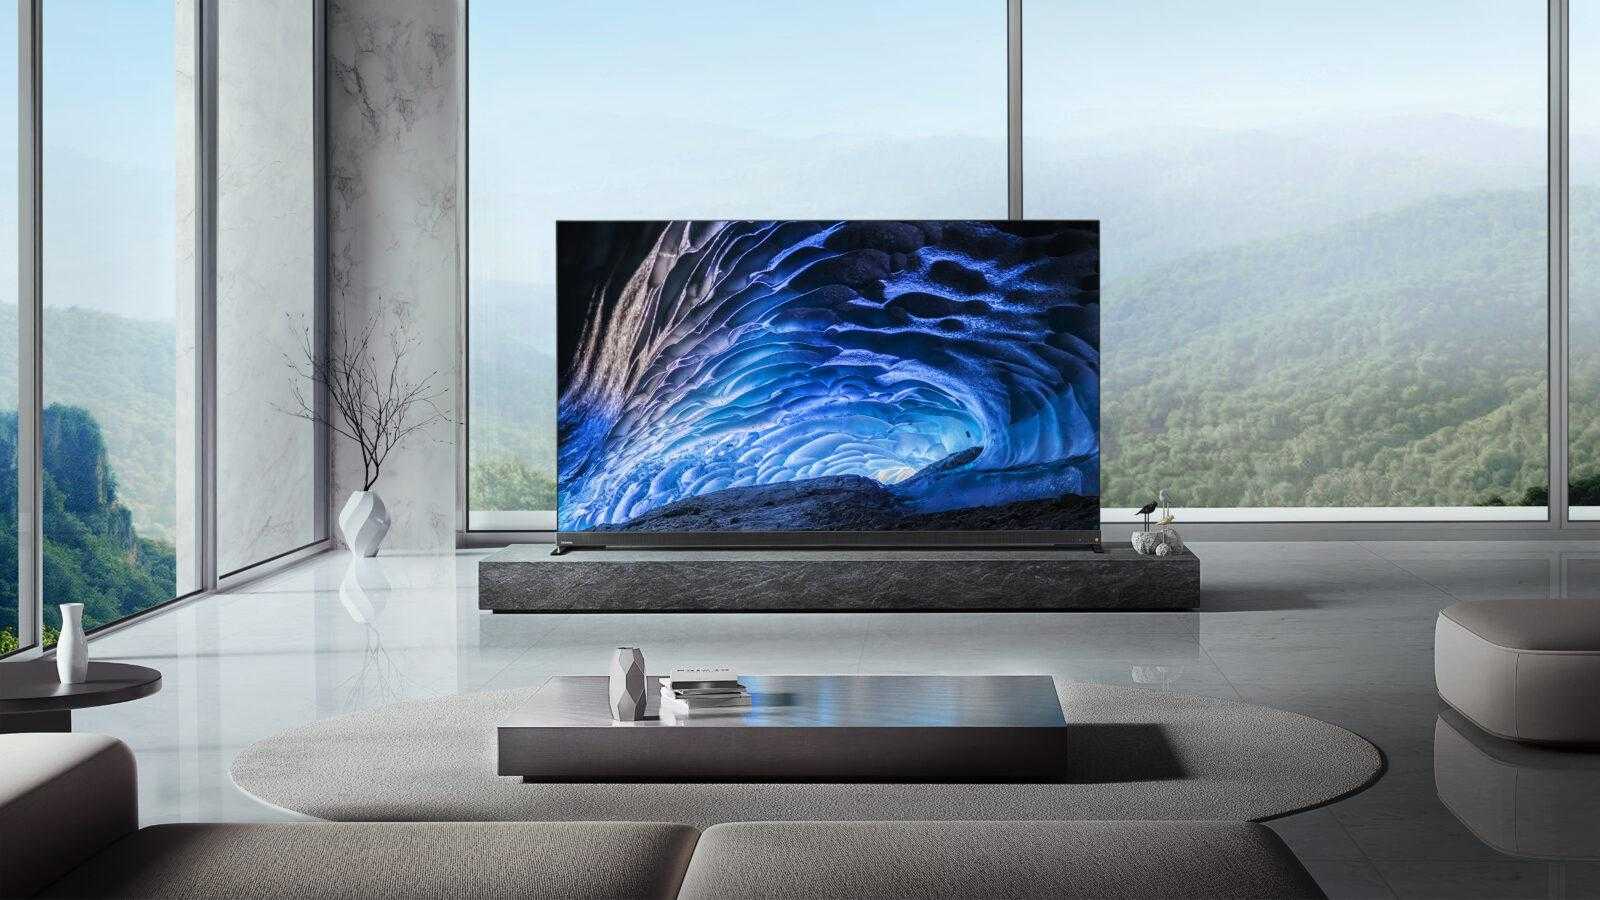 Обзор OLED-телевизора Toshiba X9900: современные технологии в премиум-классе (x9900l lifestyle picturedaylight 2)